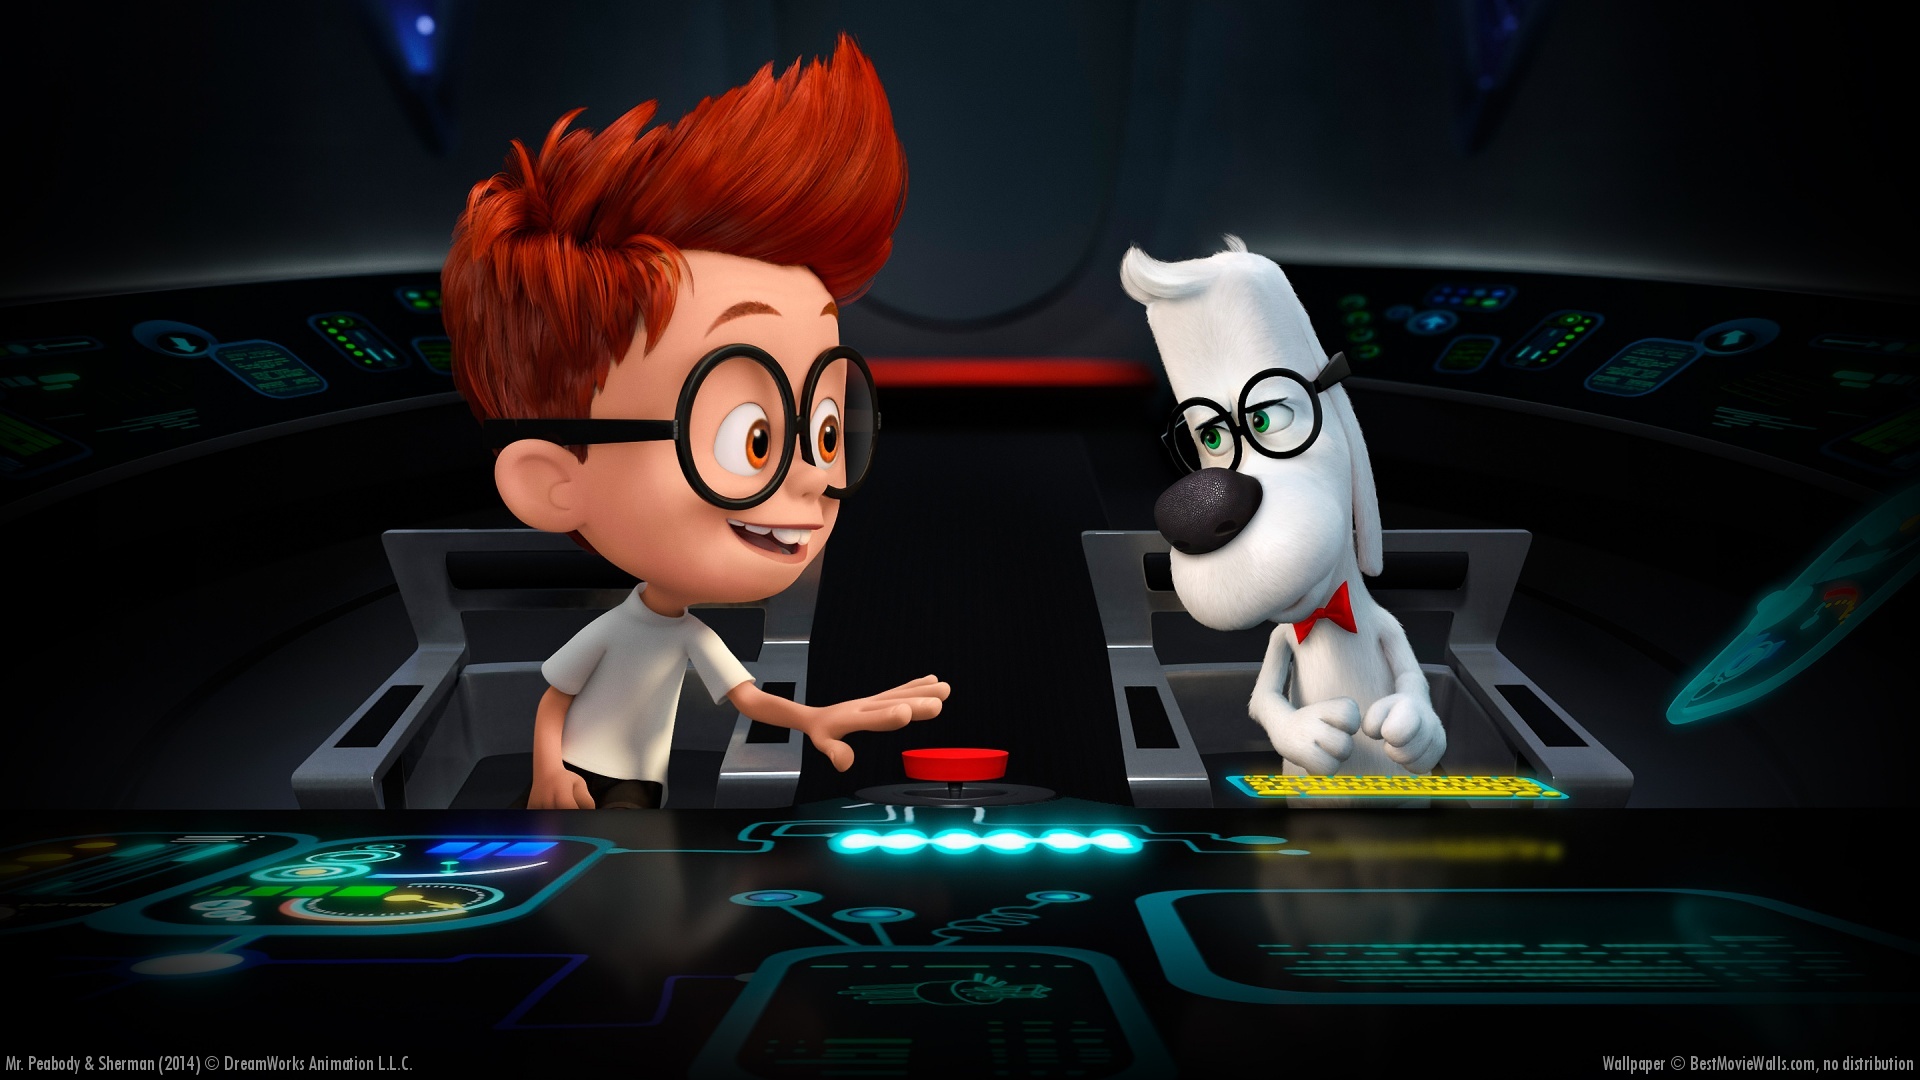 Mr. Peabody and Sherman Wallpaper - Animated Movies Wallpaper (38402254) -  Fanpop